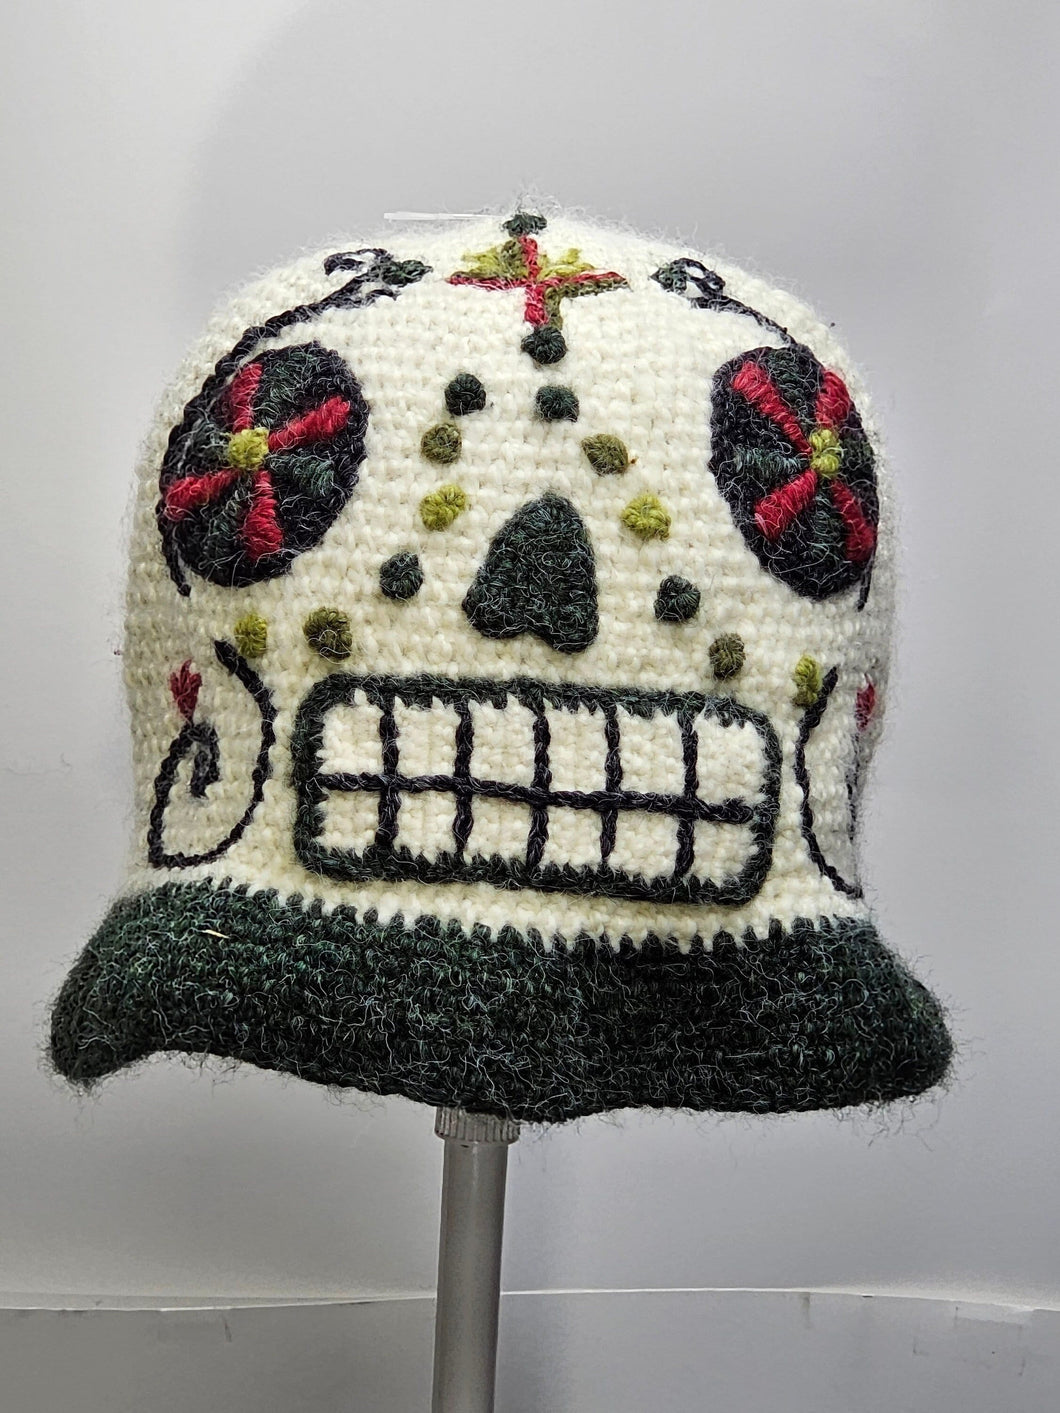 Sugar skull day of the dead bucket hat knit winter ski snowboard unisex